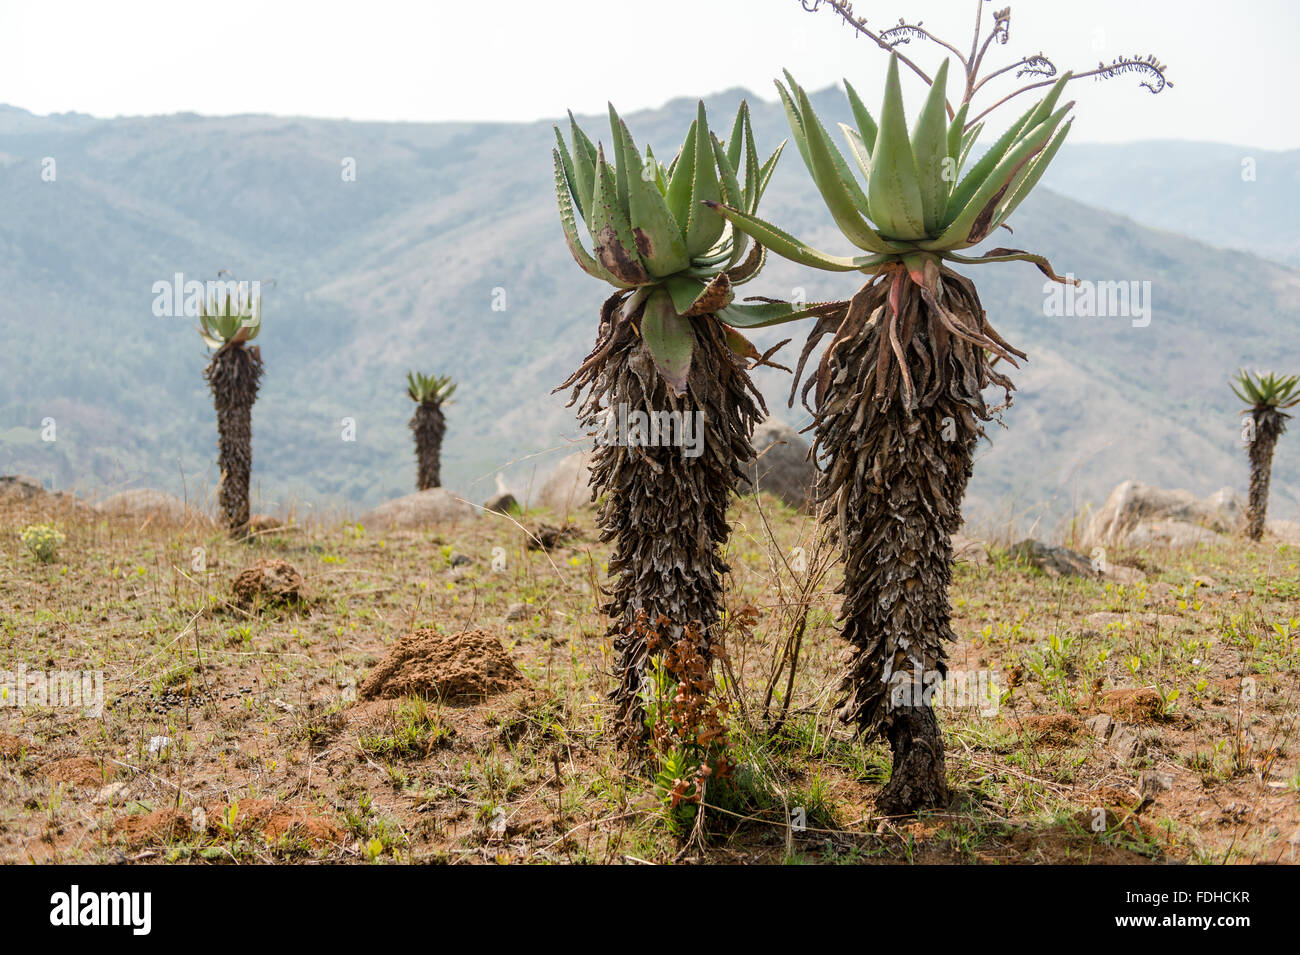 Aloe-Pflanzen in einem Feld im Mlilwane Wildlife Sanctuary in Swasiland, Afrika. Stockfoto